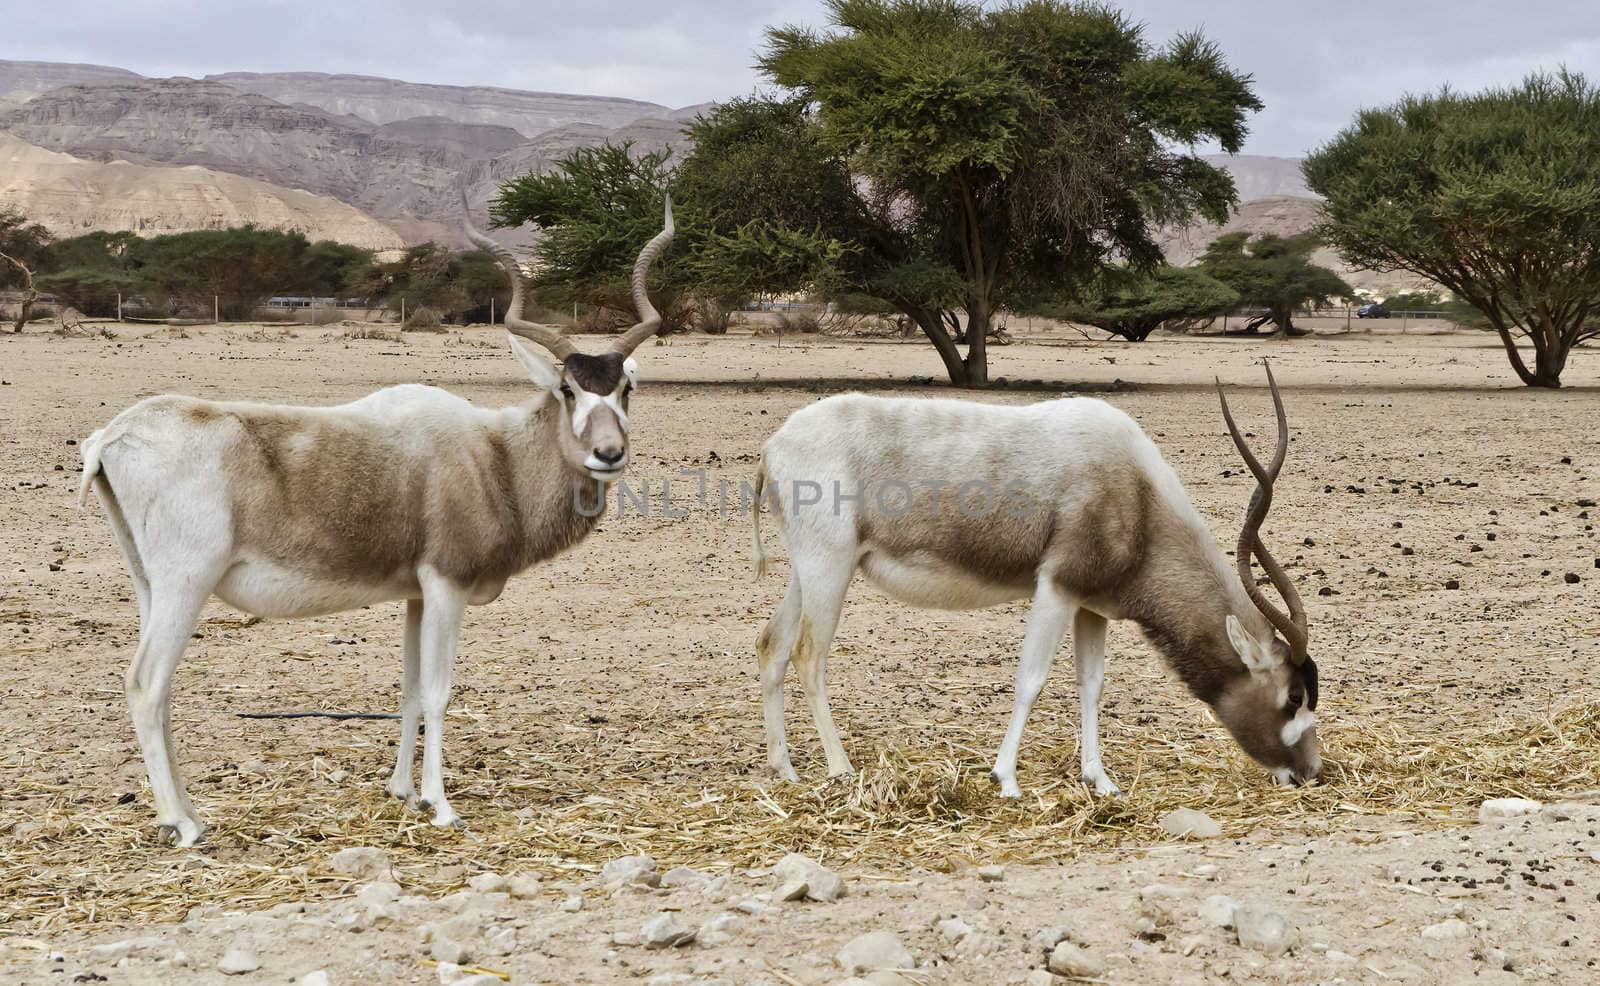 A herbivorous antelope, the Arabian oryx (Oryx leucoryx) by Gorshkov13